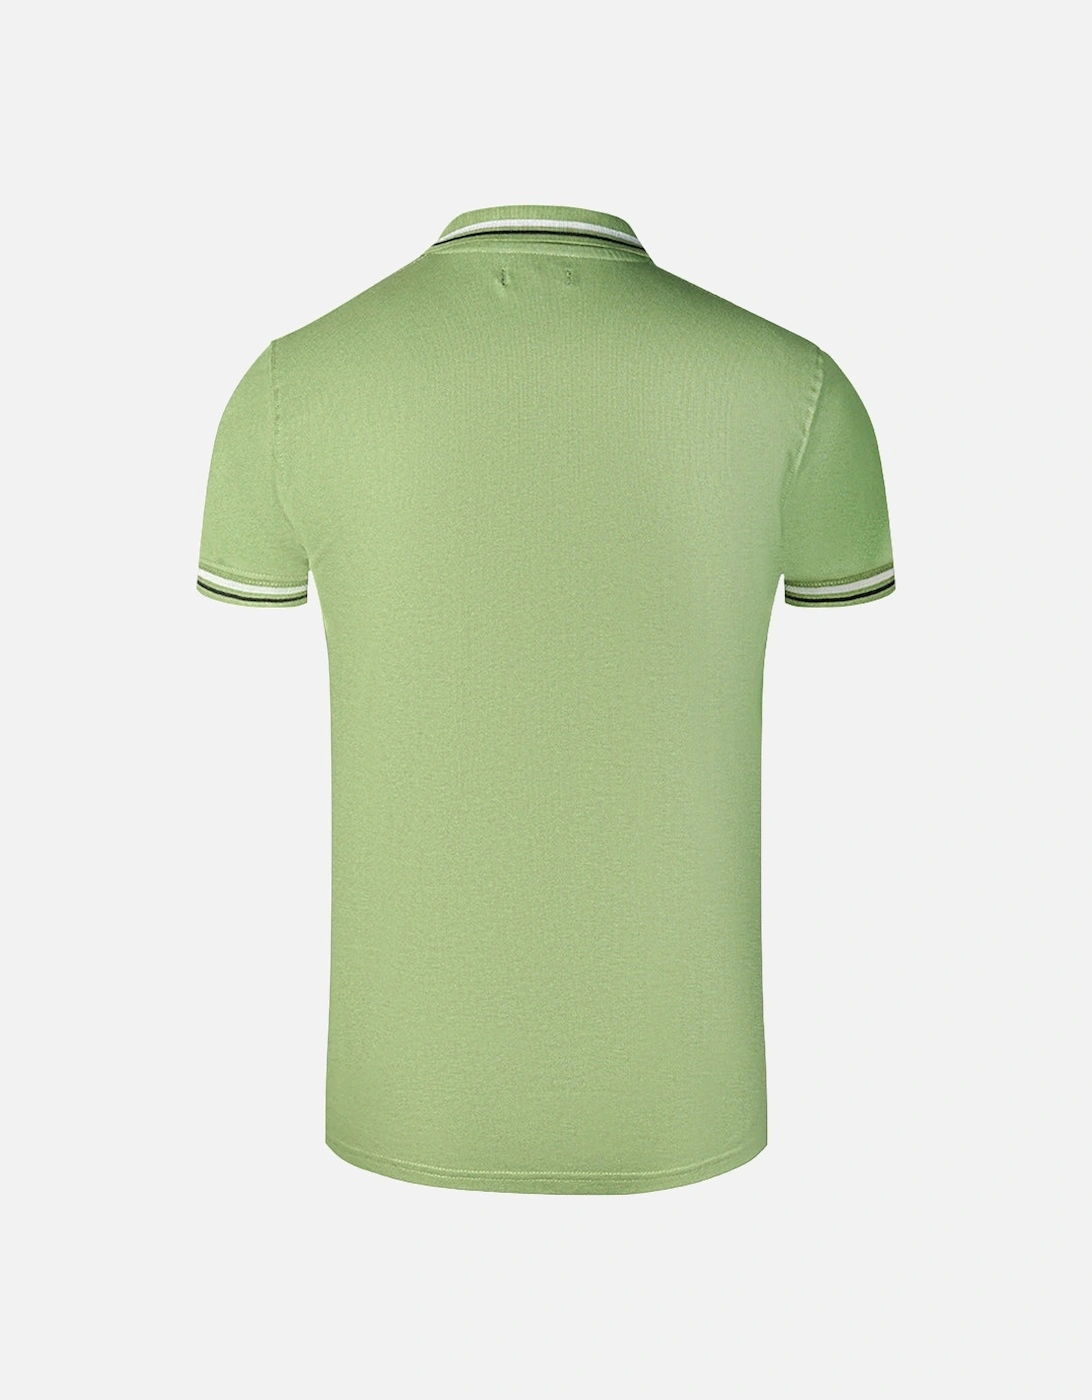 Cavalli Class Twinned Tipped Collar Black Logo Green Polo Shirt